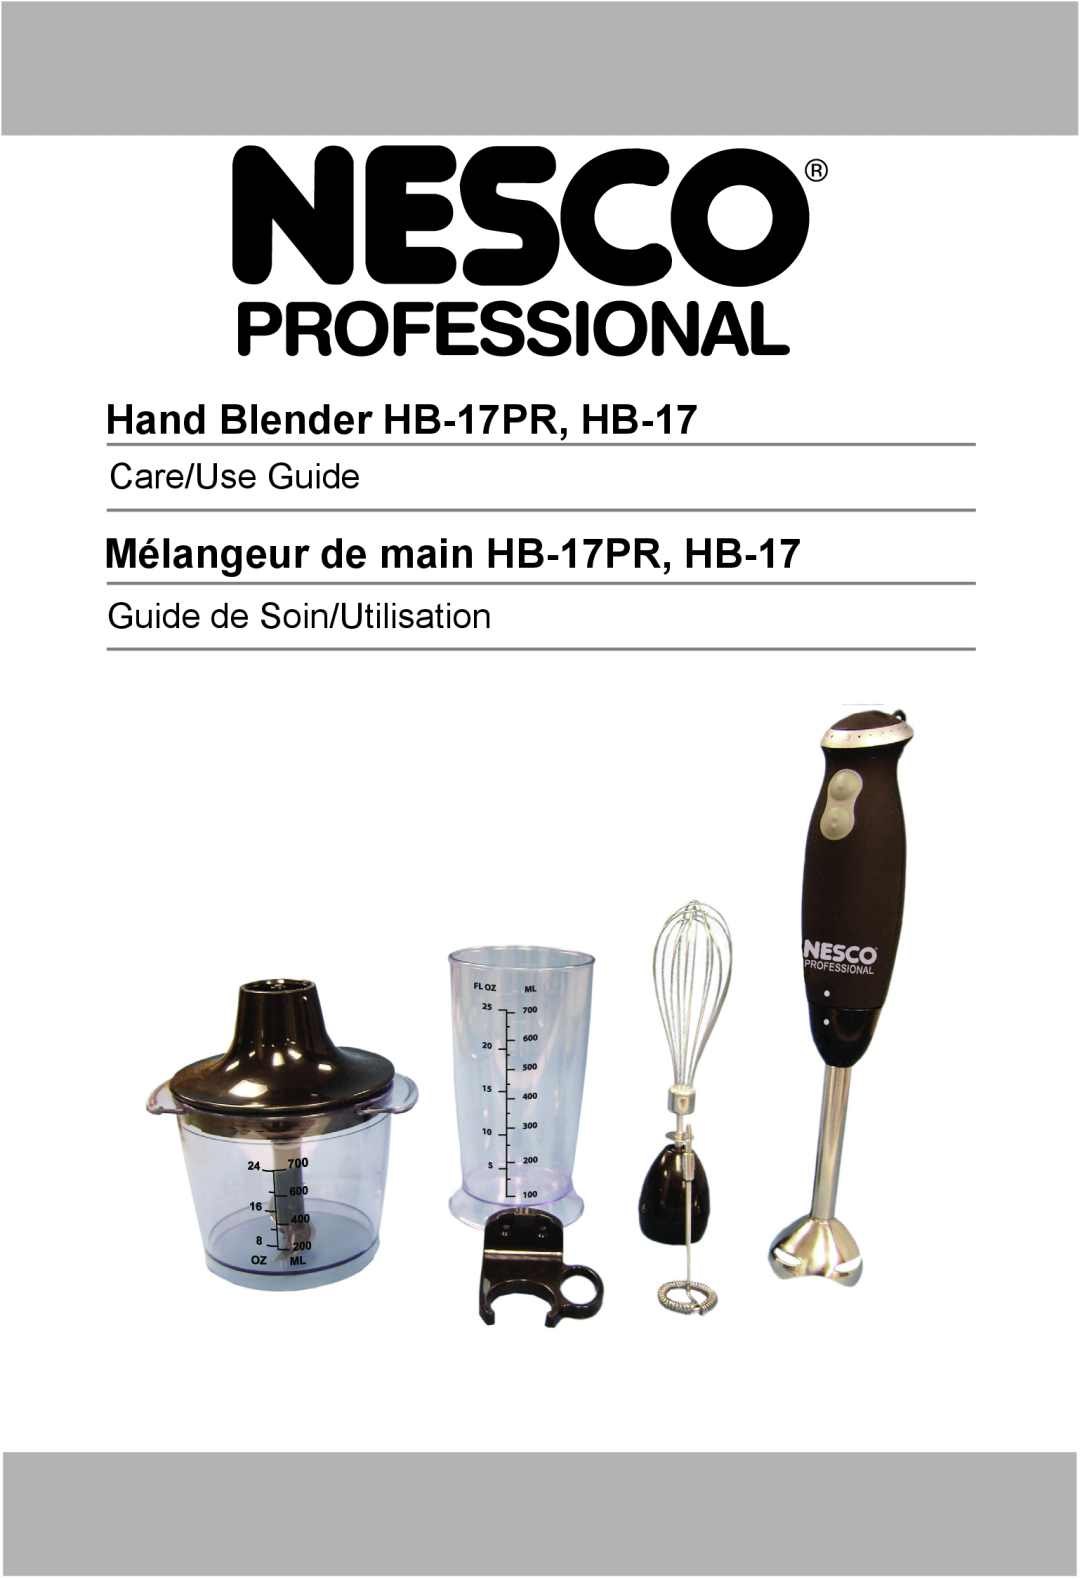 Nesco manual Hand Blender HB-17PR, HB-17, Mélangeur de main HB-17PR, HB-17, Care/Use Guide, Guide de Soin/Utilisation 